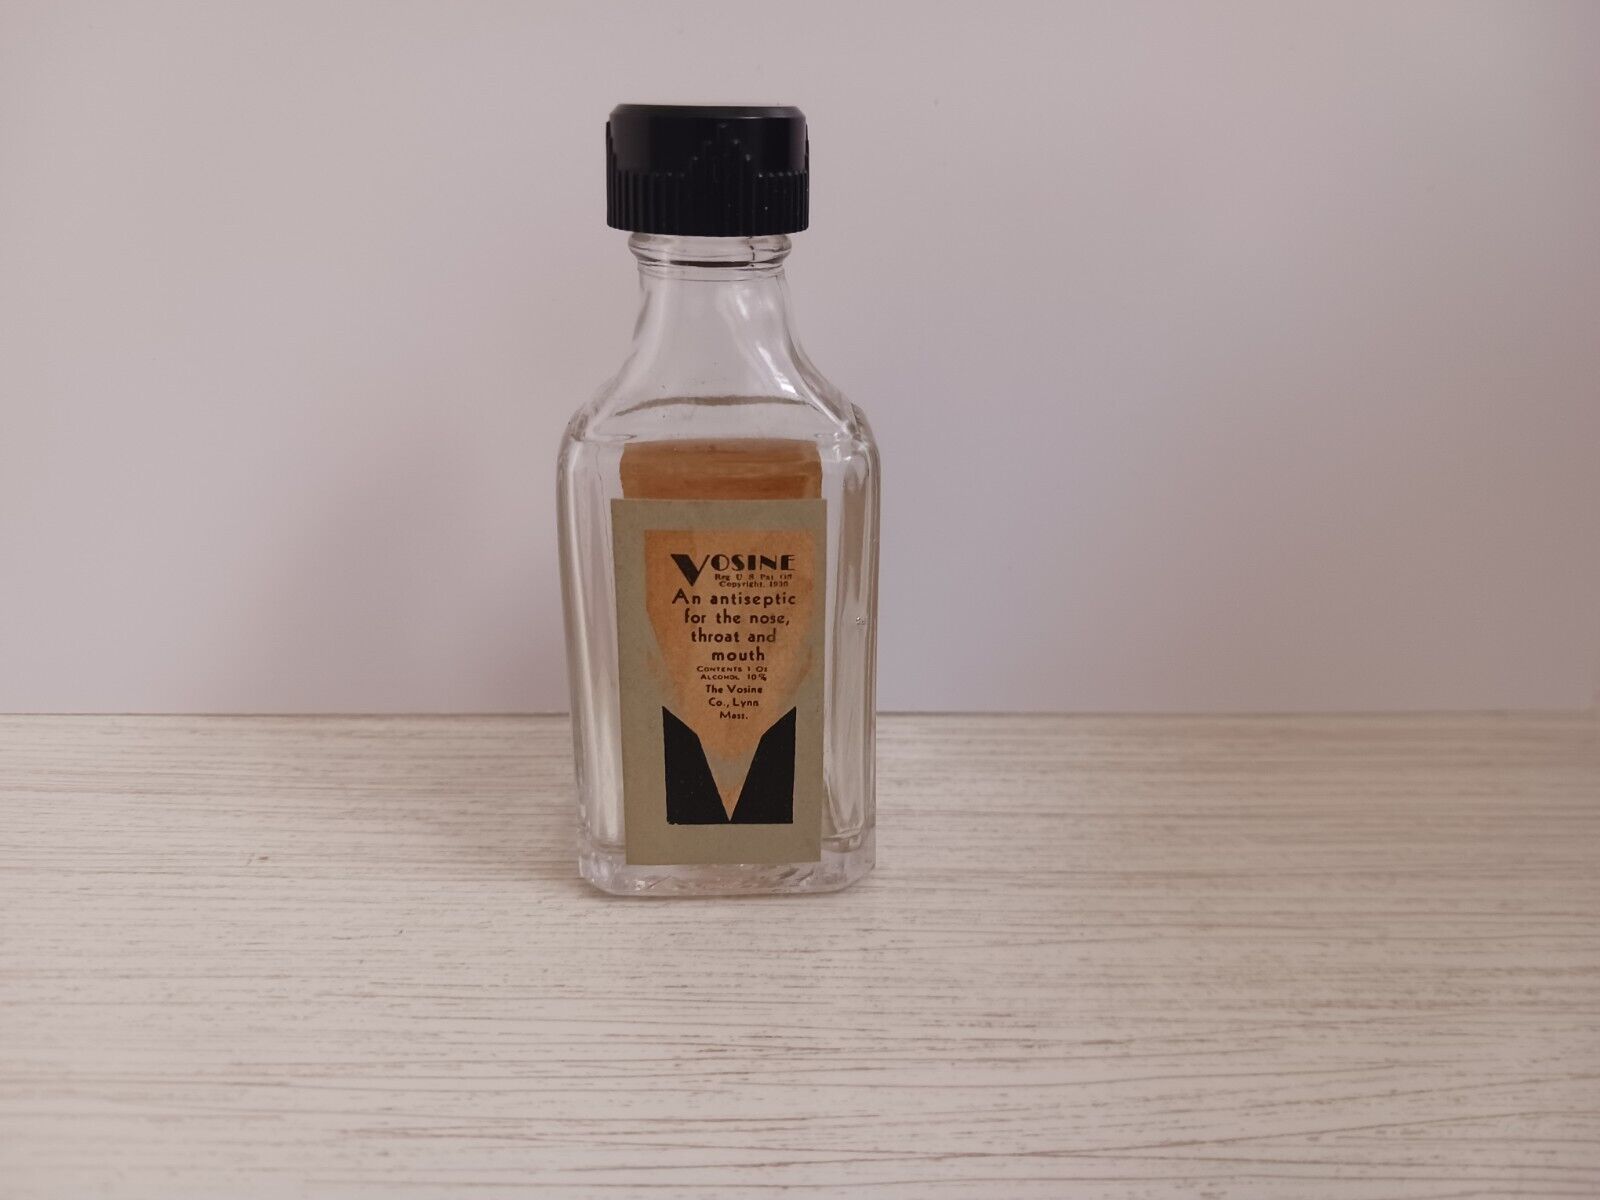 Vintage 1930s Medicine Bottle Antiseptic Vosine Art Deco